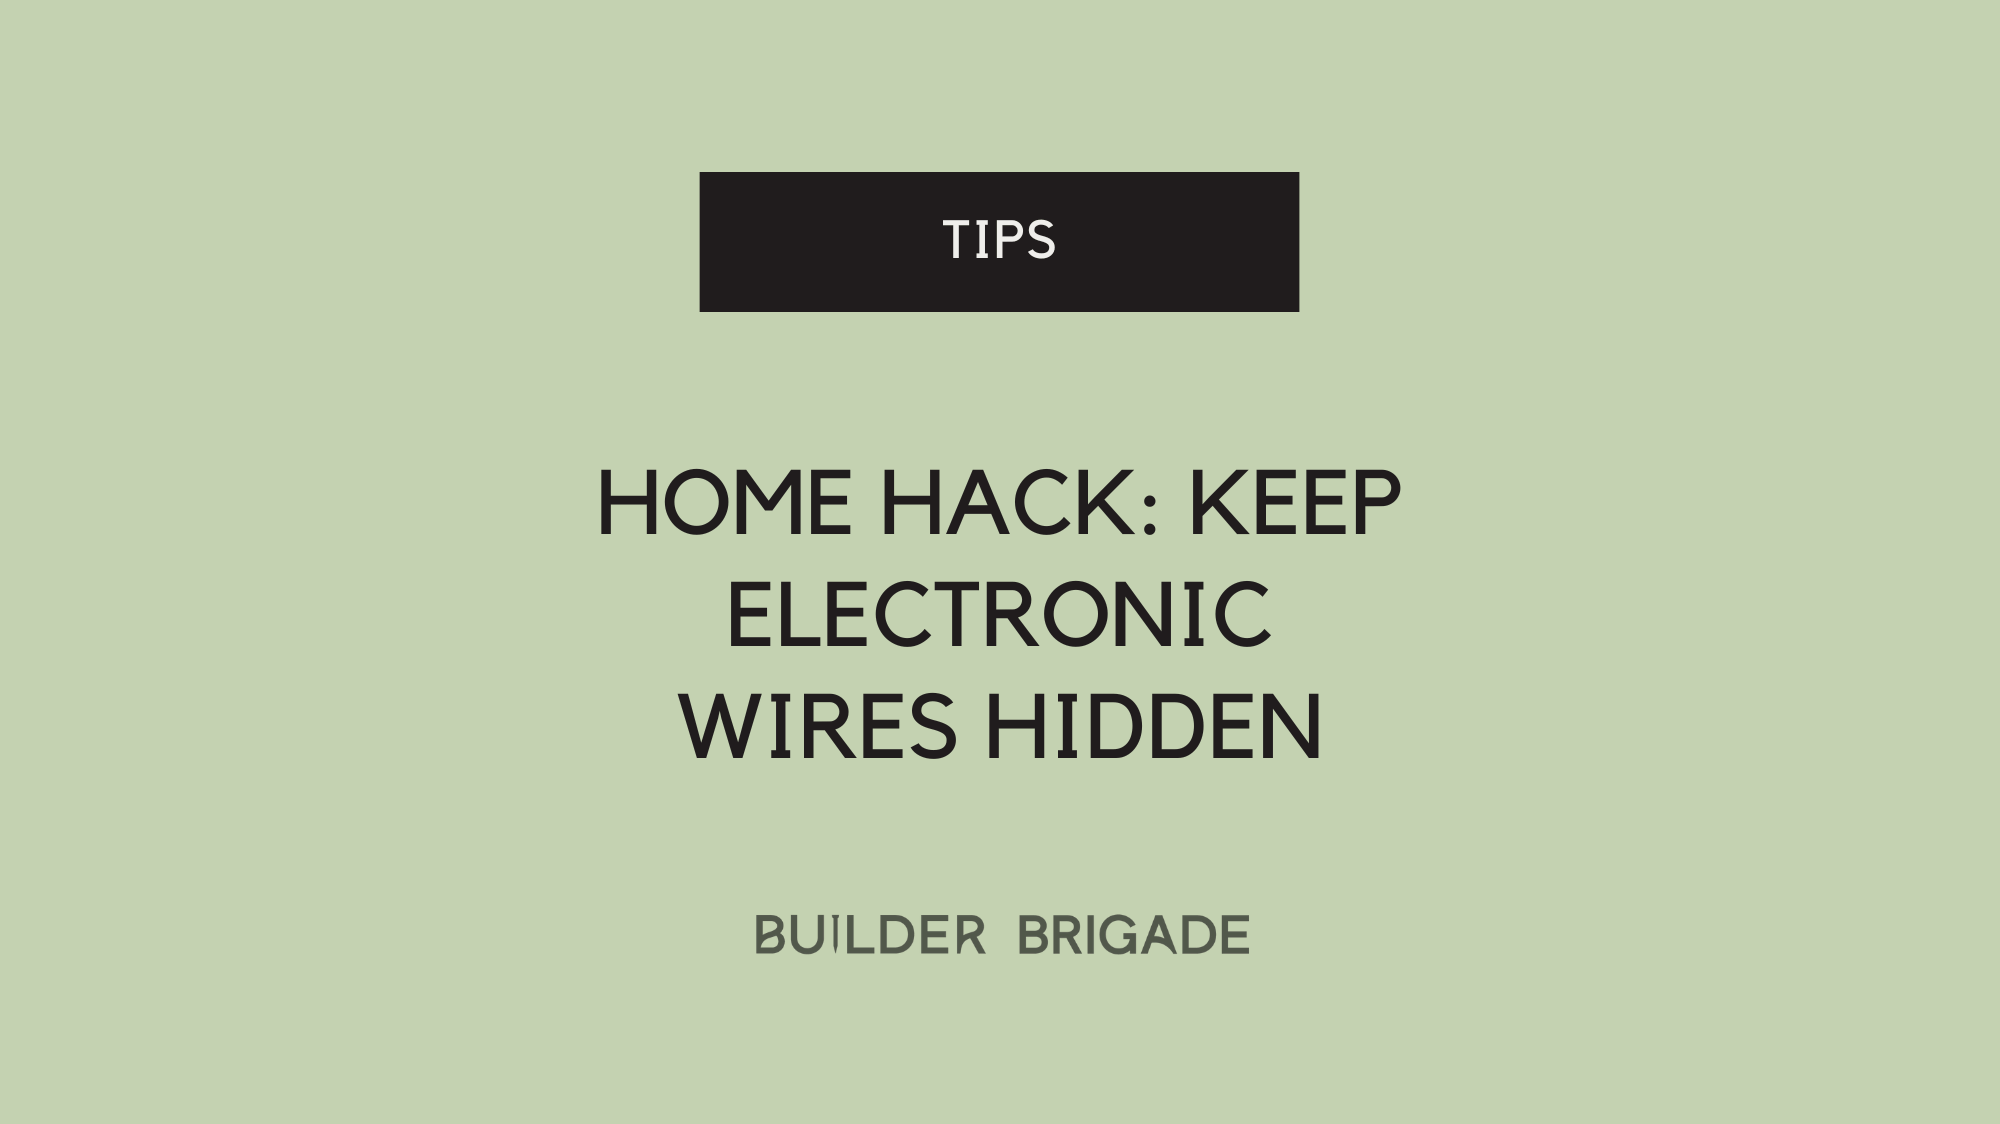 Hack: Keep electronic wires hidden